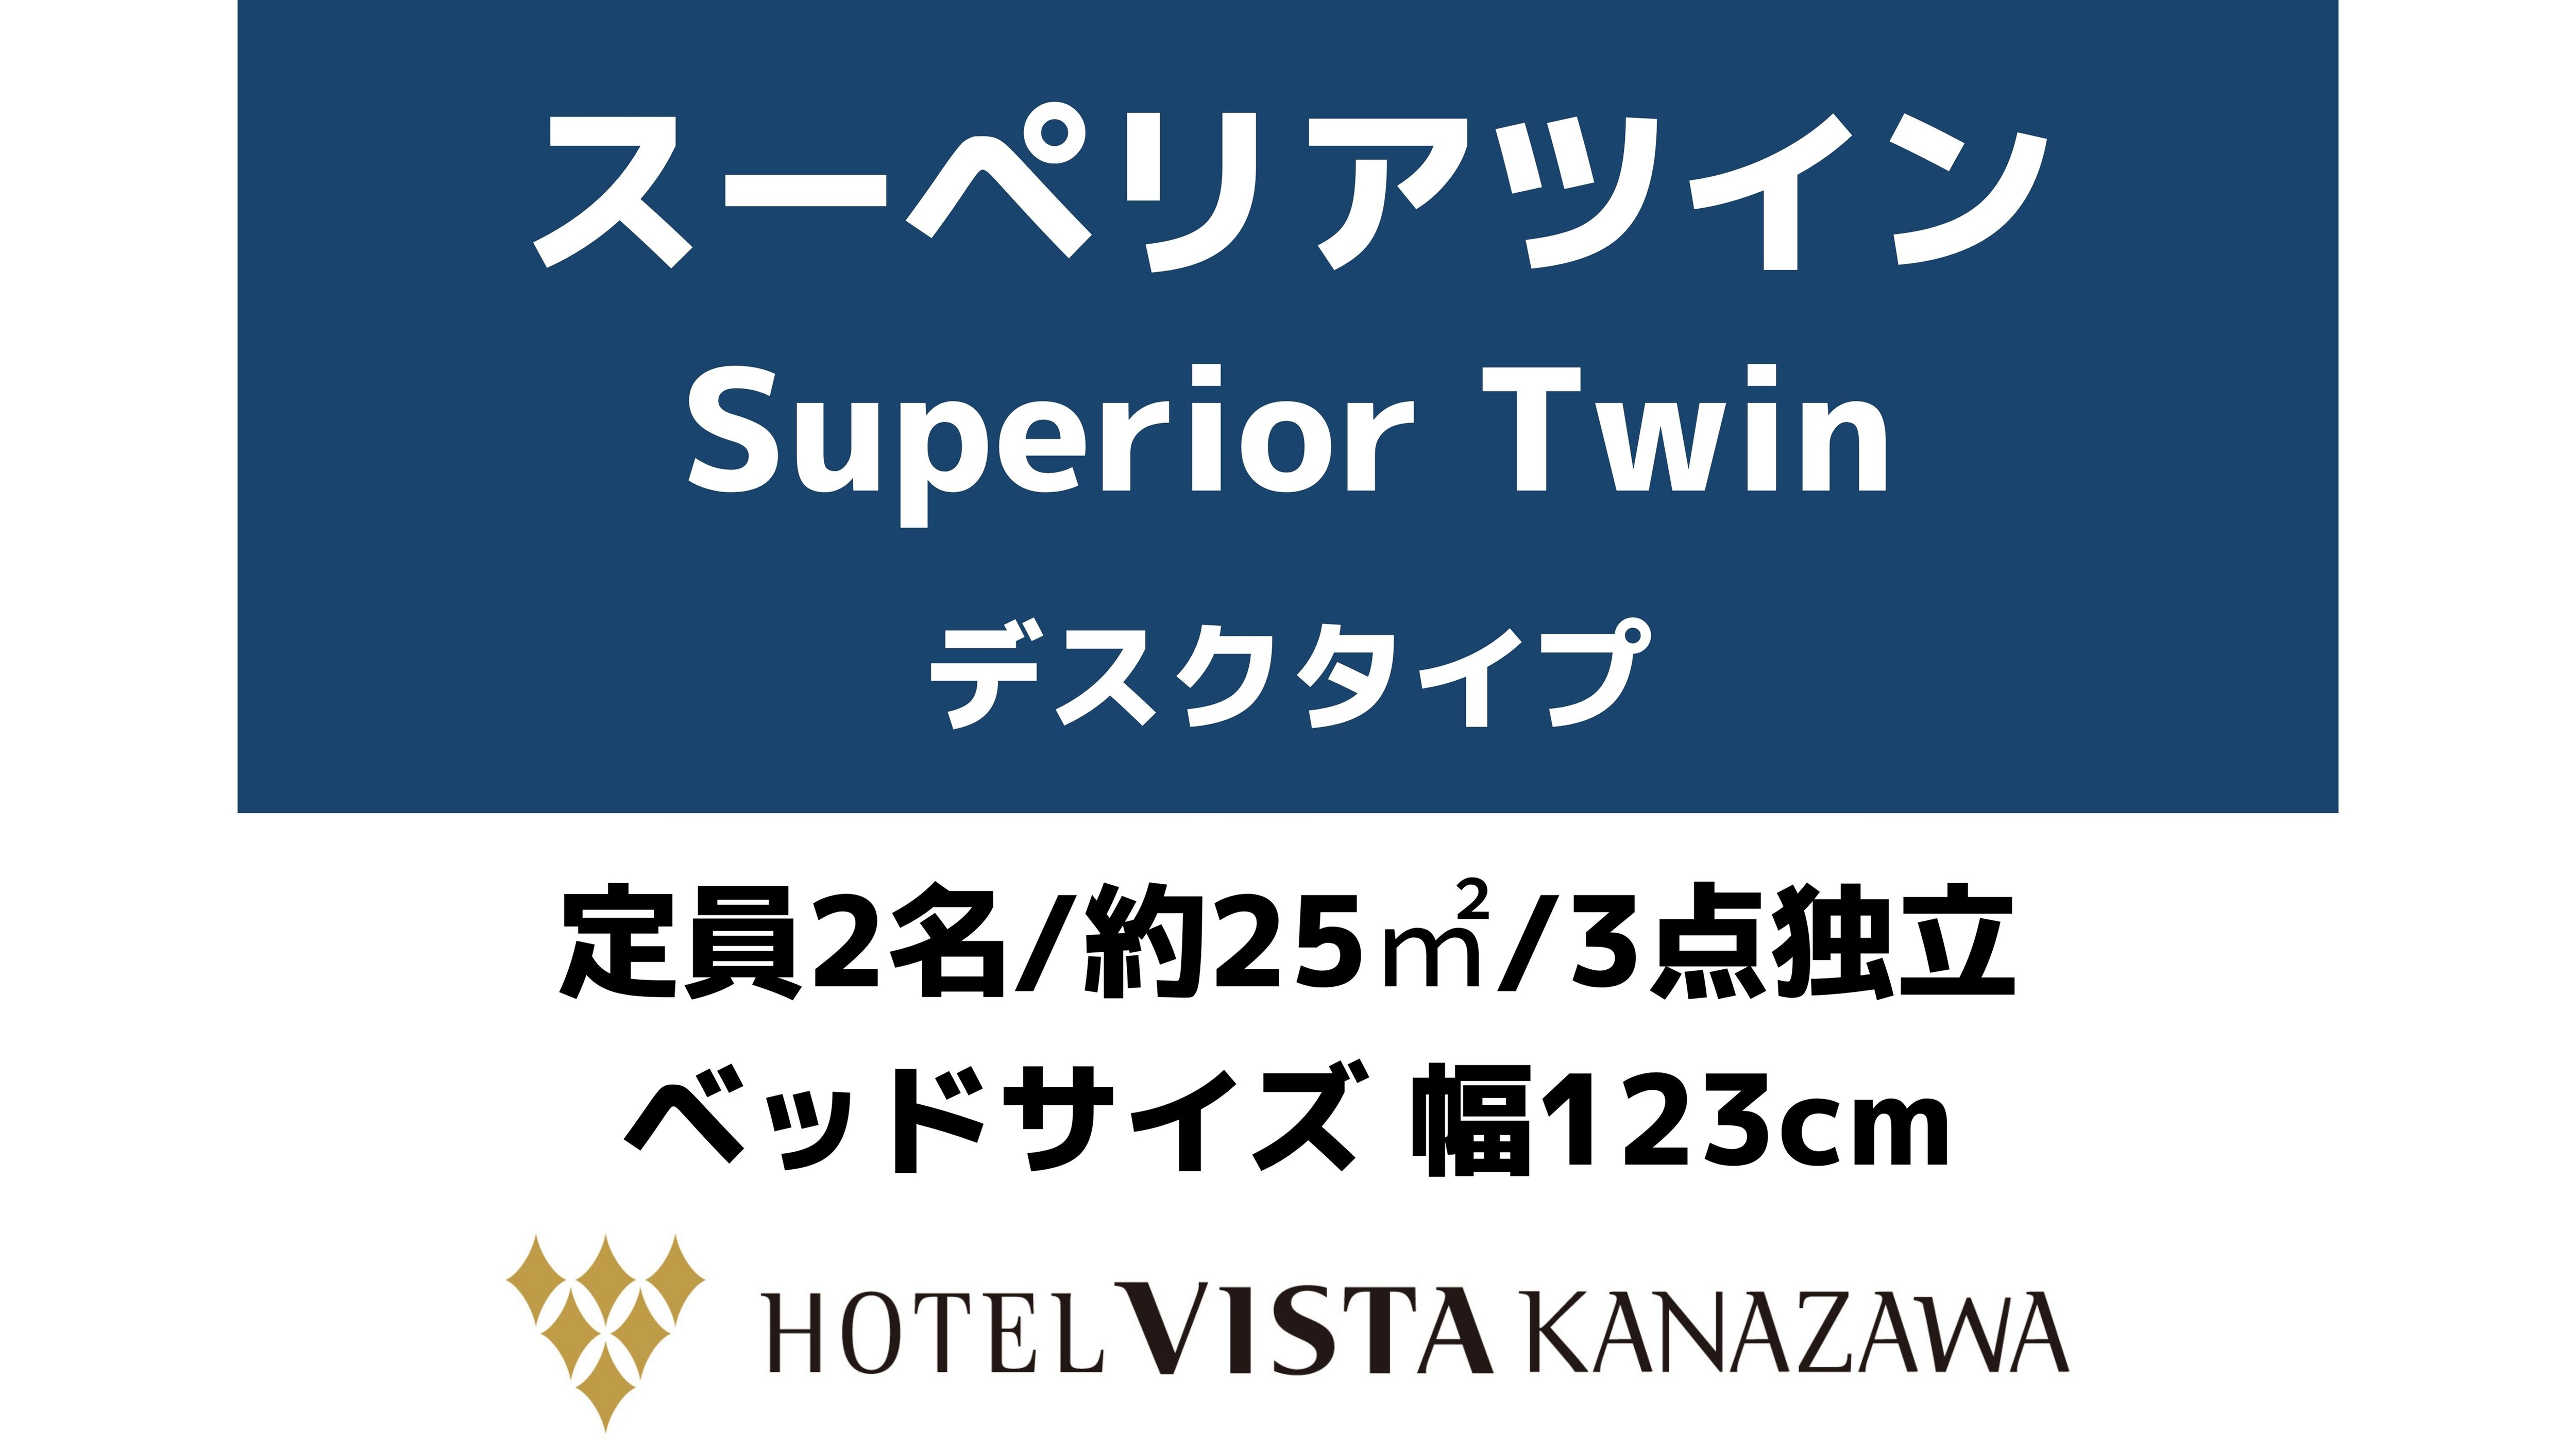 Hotel photo 17 of Hotel Vista Kanazawa.